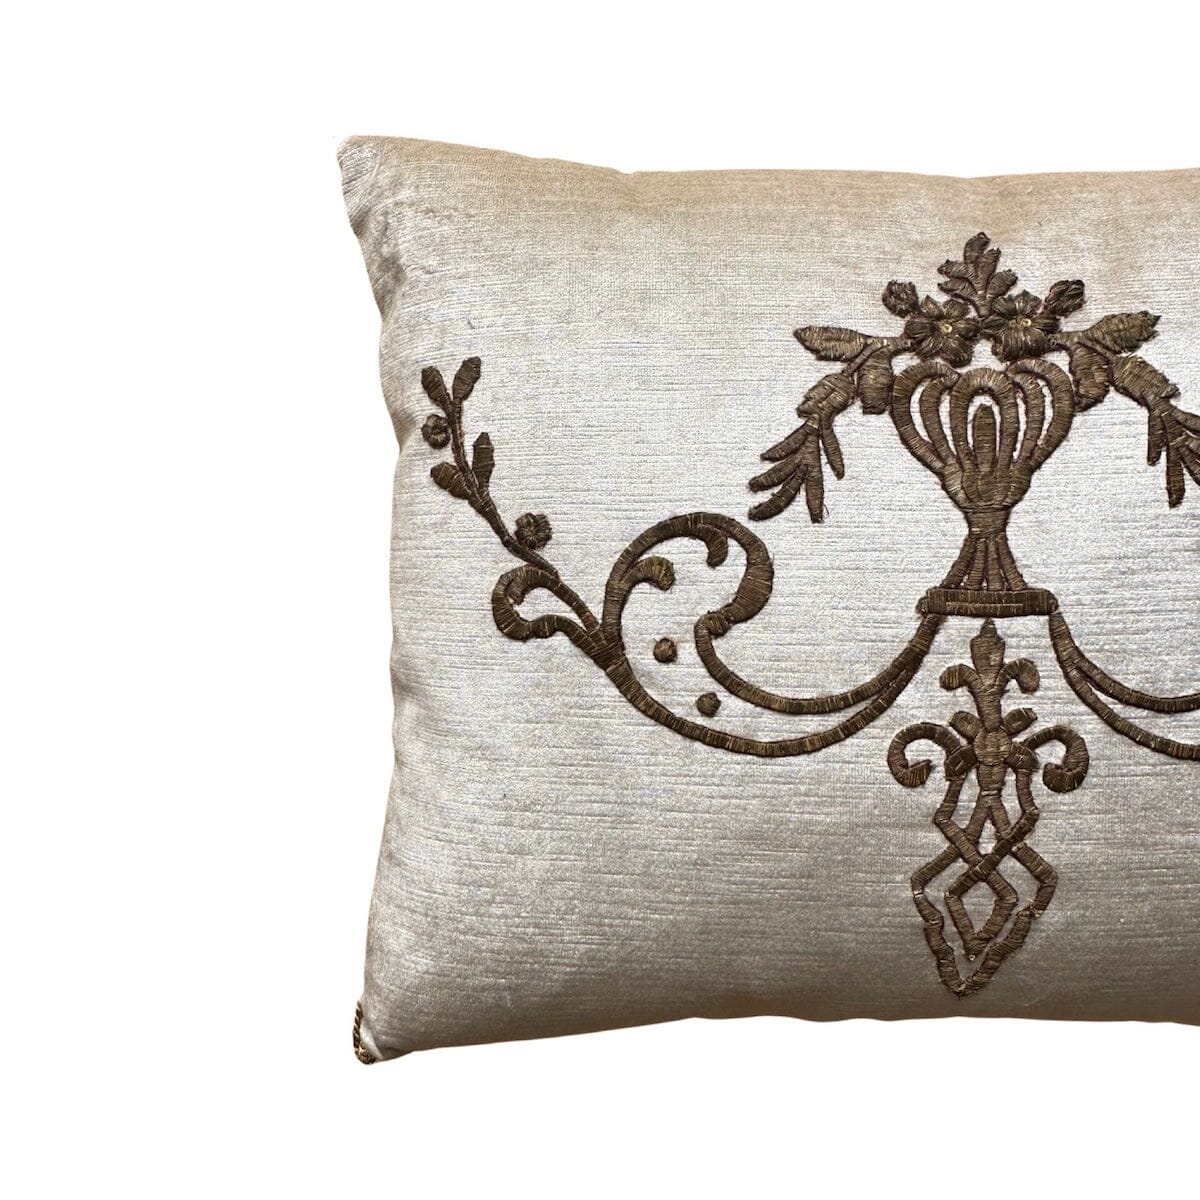 Antique Ottoman Empire Raised Gold Metallic Embroidery (#E111023A&B | 16 1/2 x 20 1/2") New Pillows B. Viz Design 